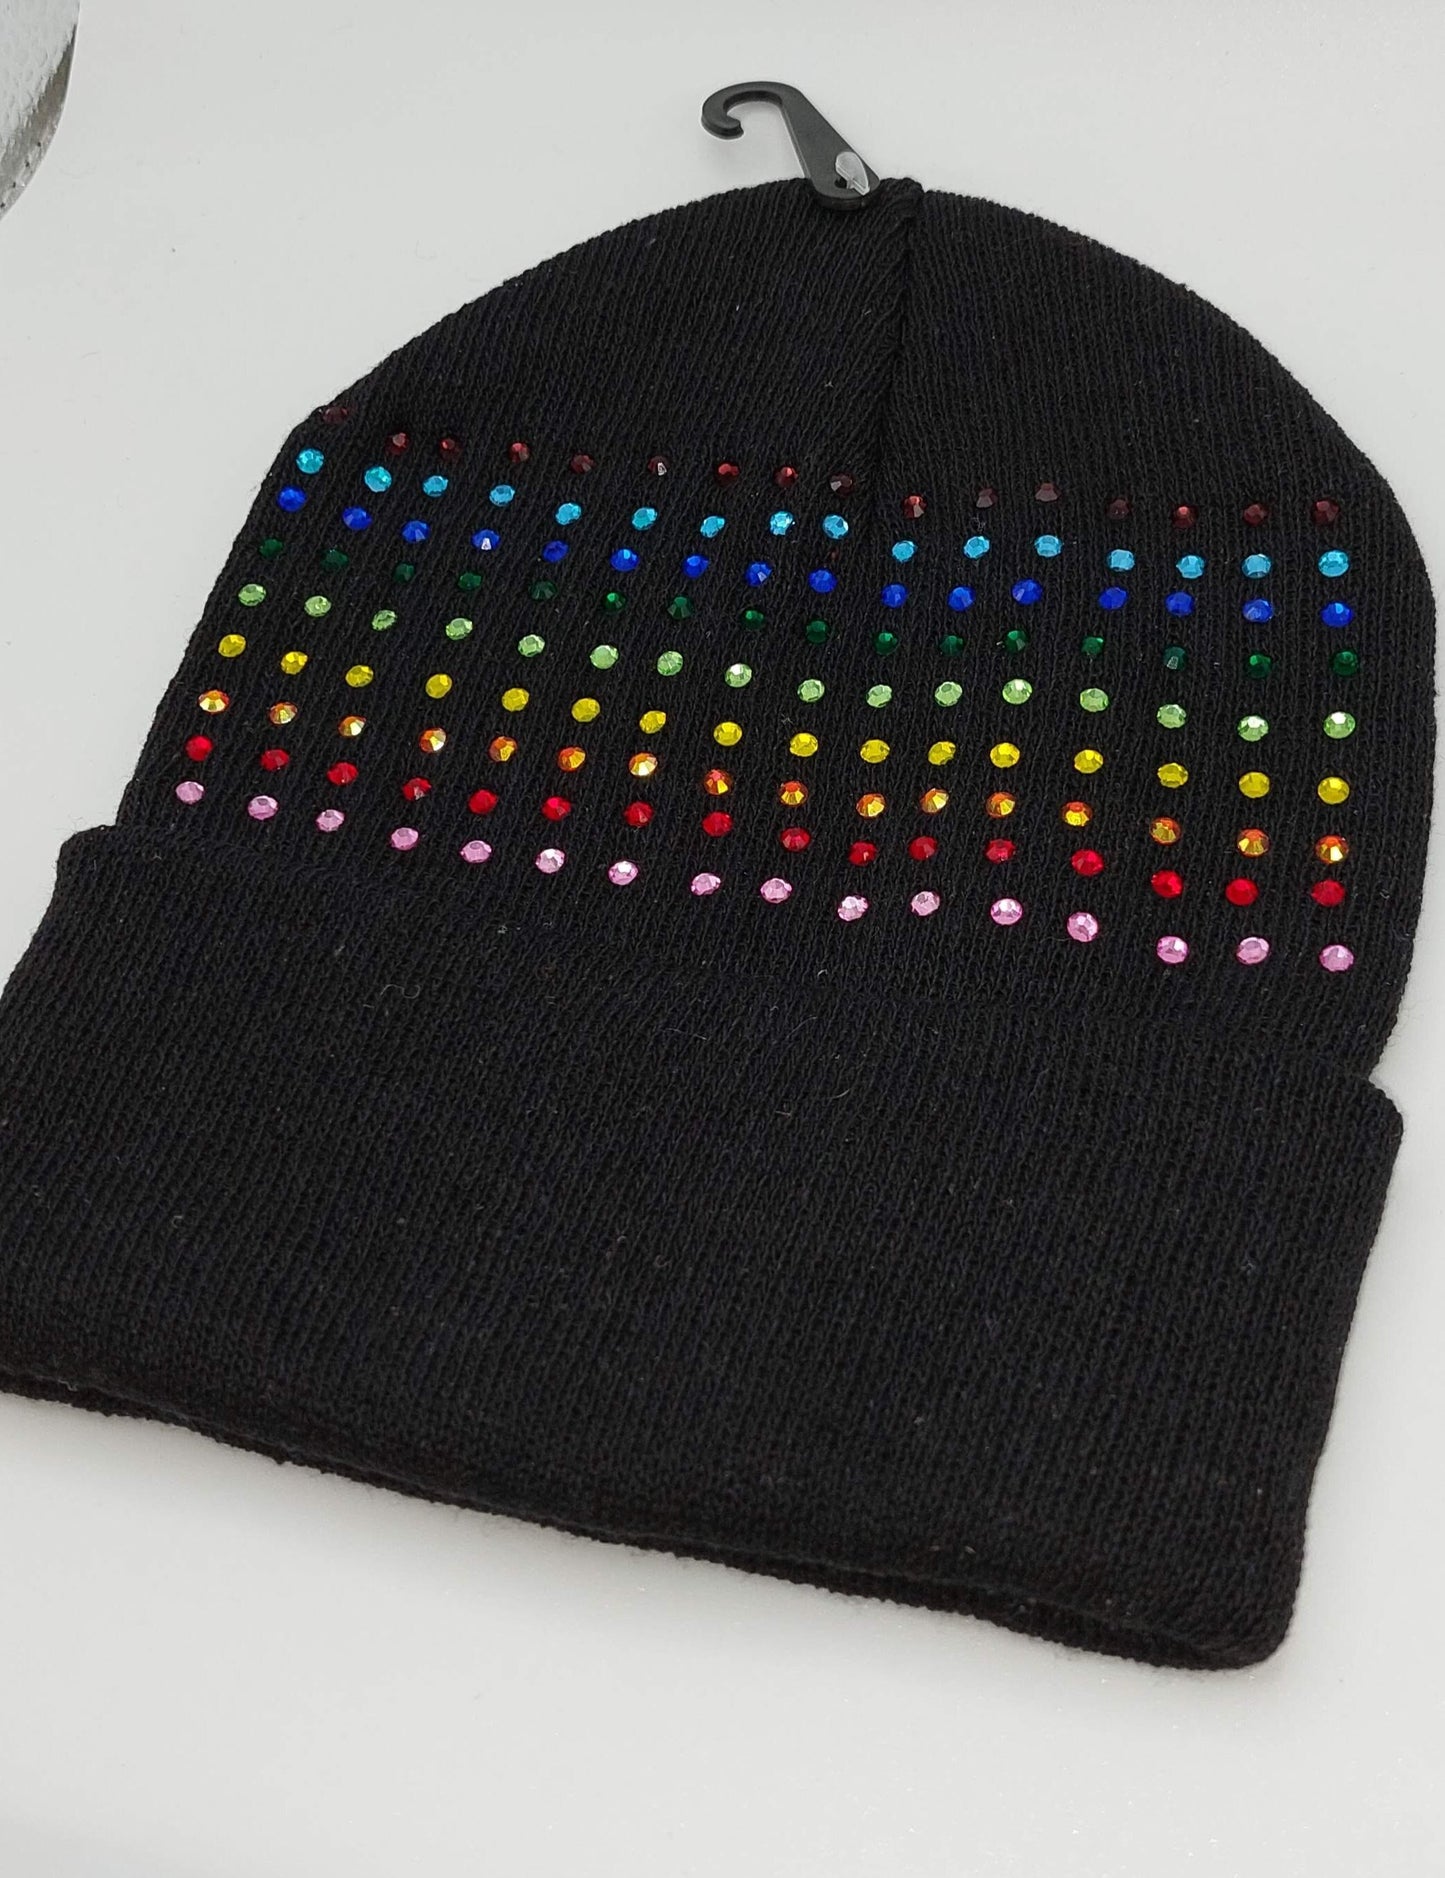 Black Rainbow Rhinestone Sparkly Winter Knit Hat Skull Cap Beanie